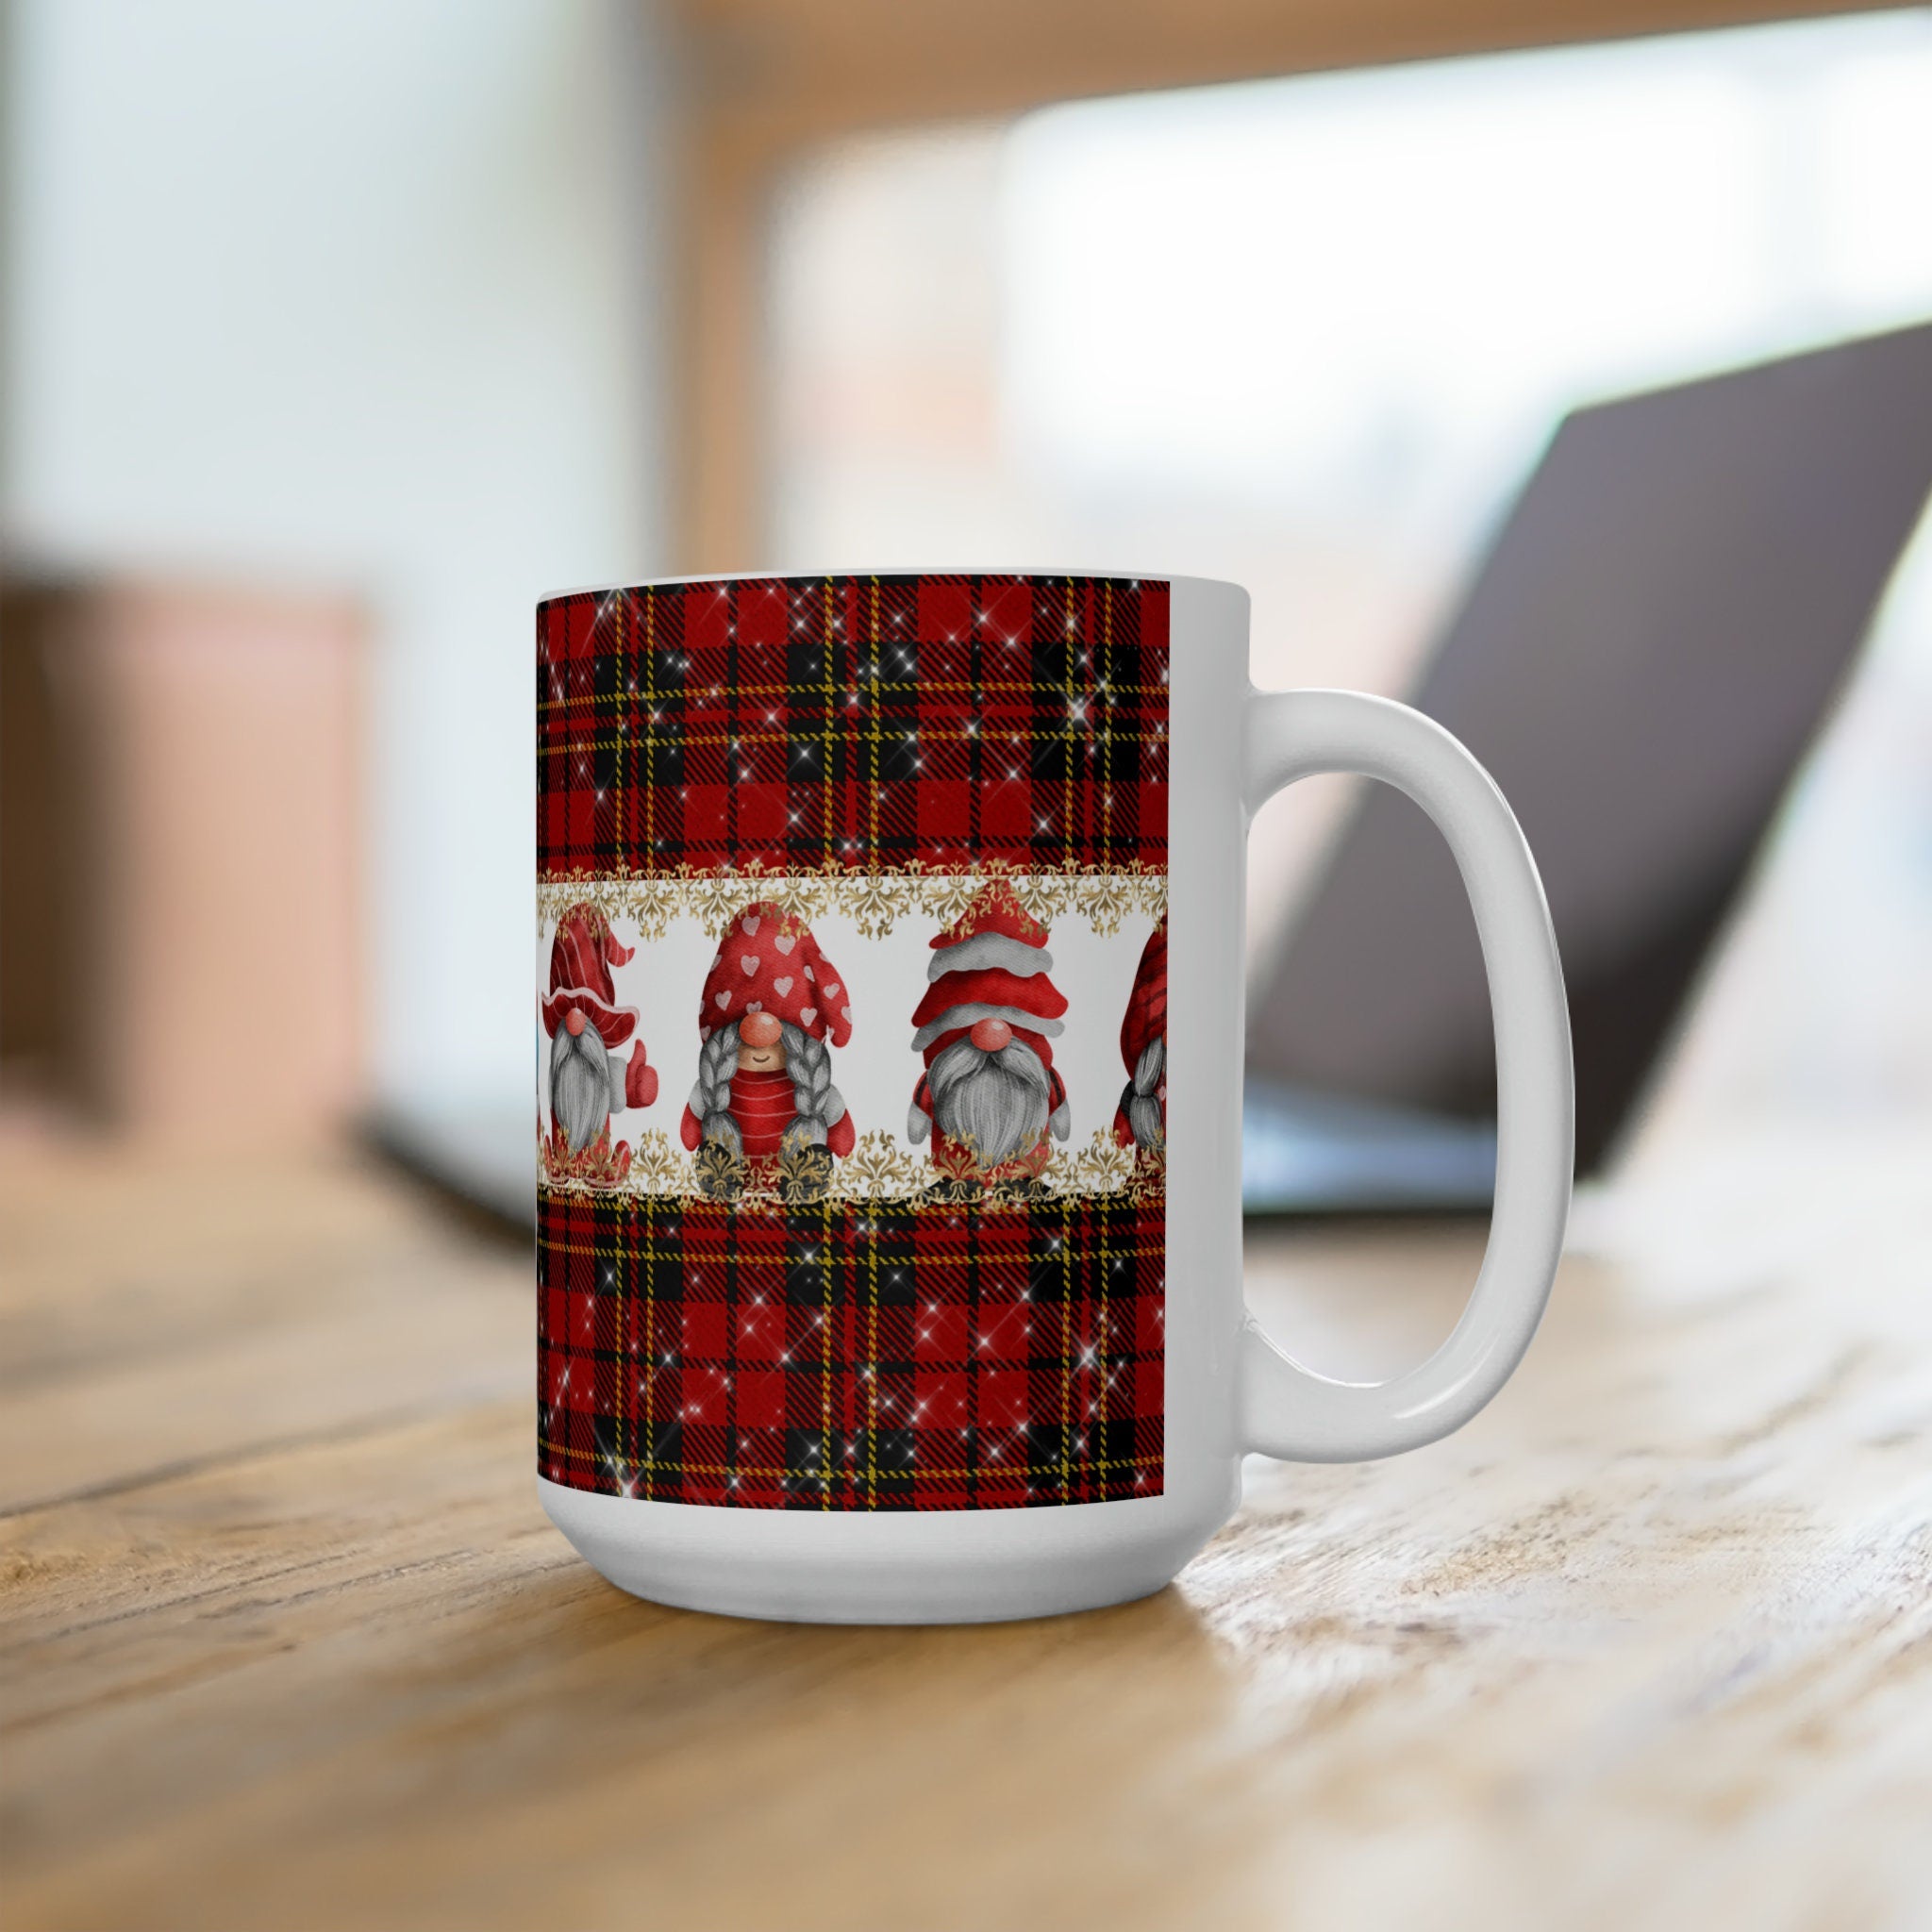 Beautiful Red Plaid and Santa Design Christmas Ceramic Mug 15oz